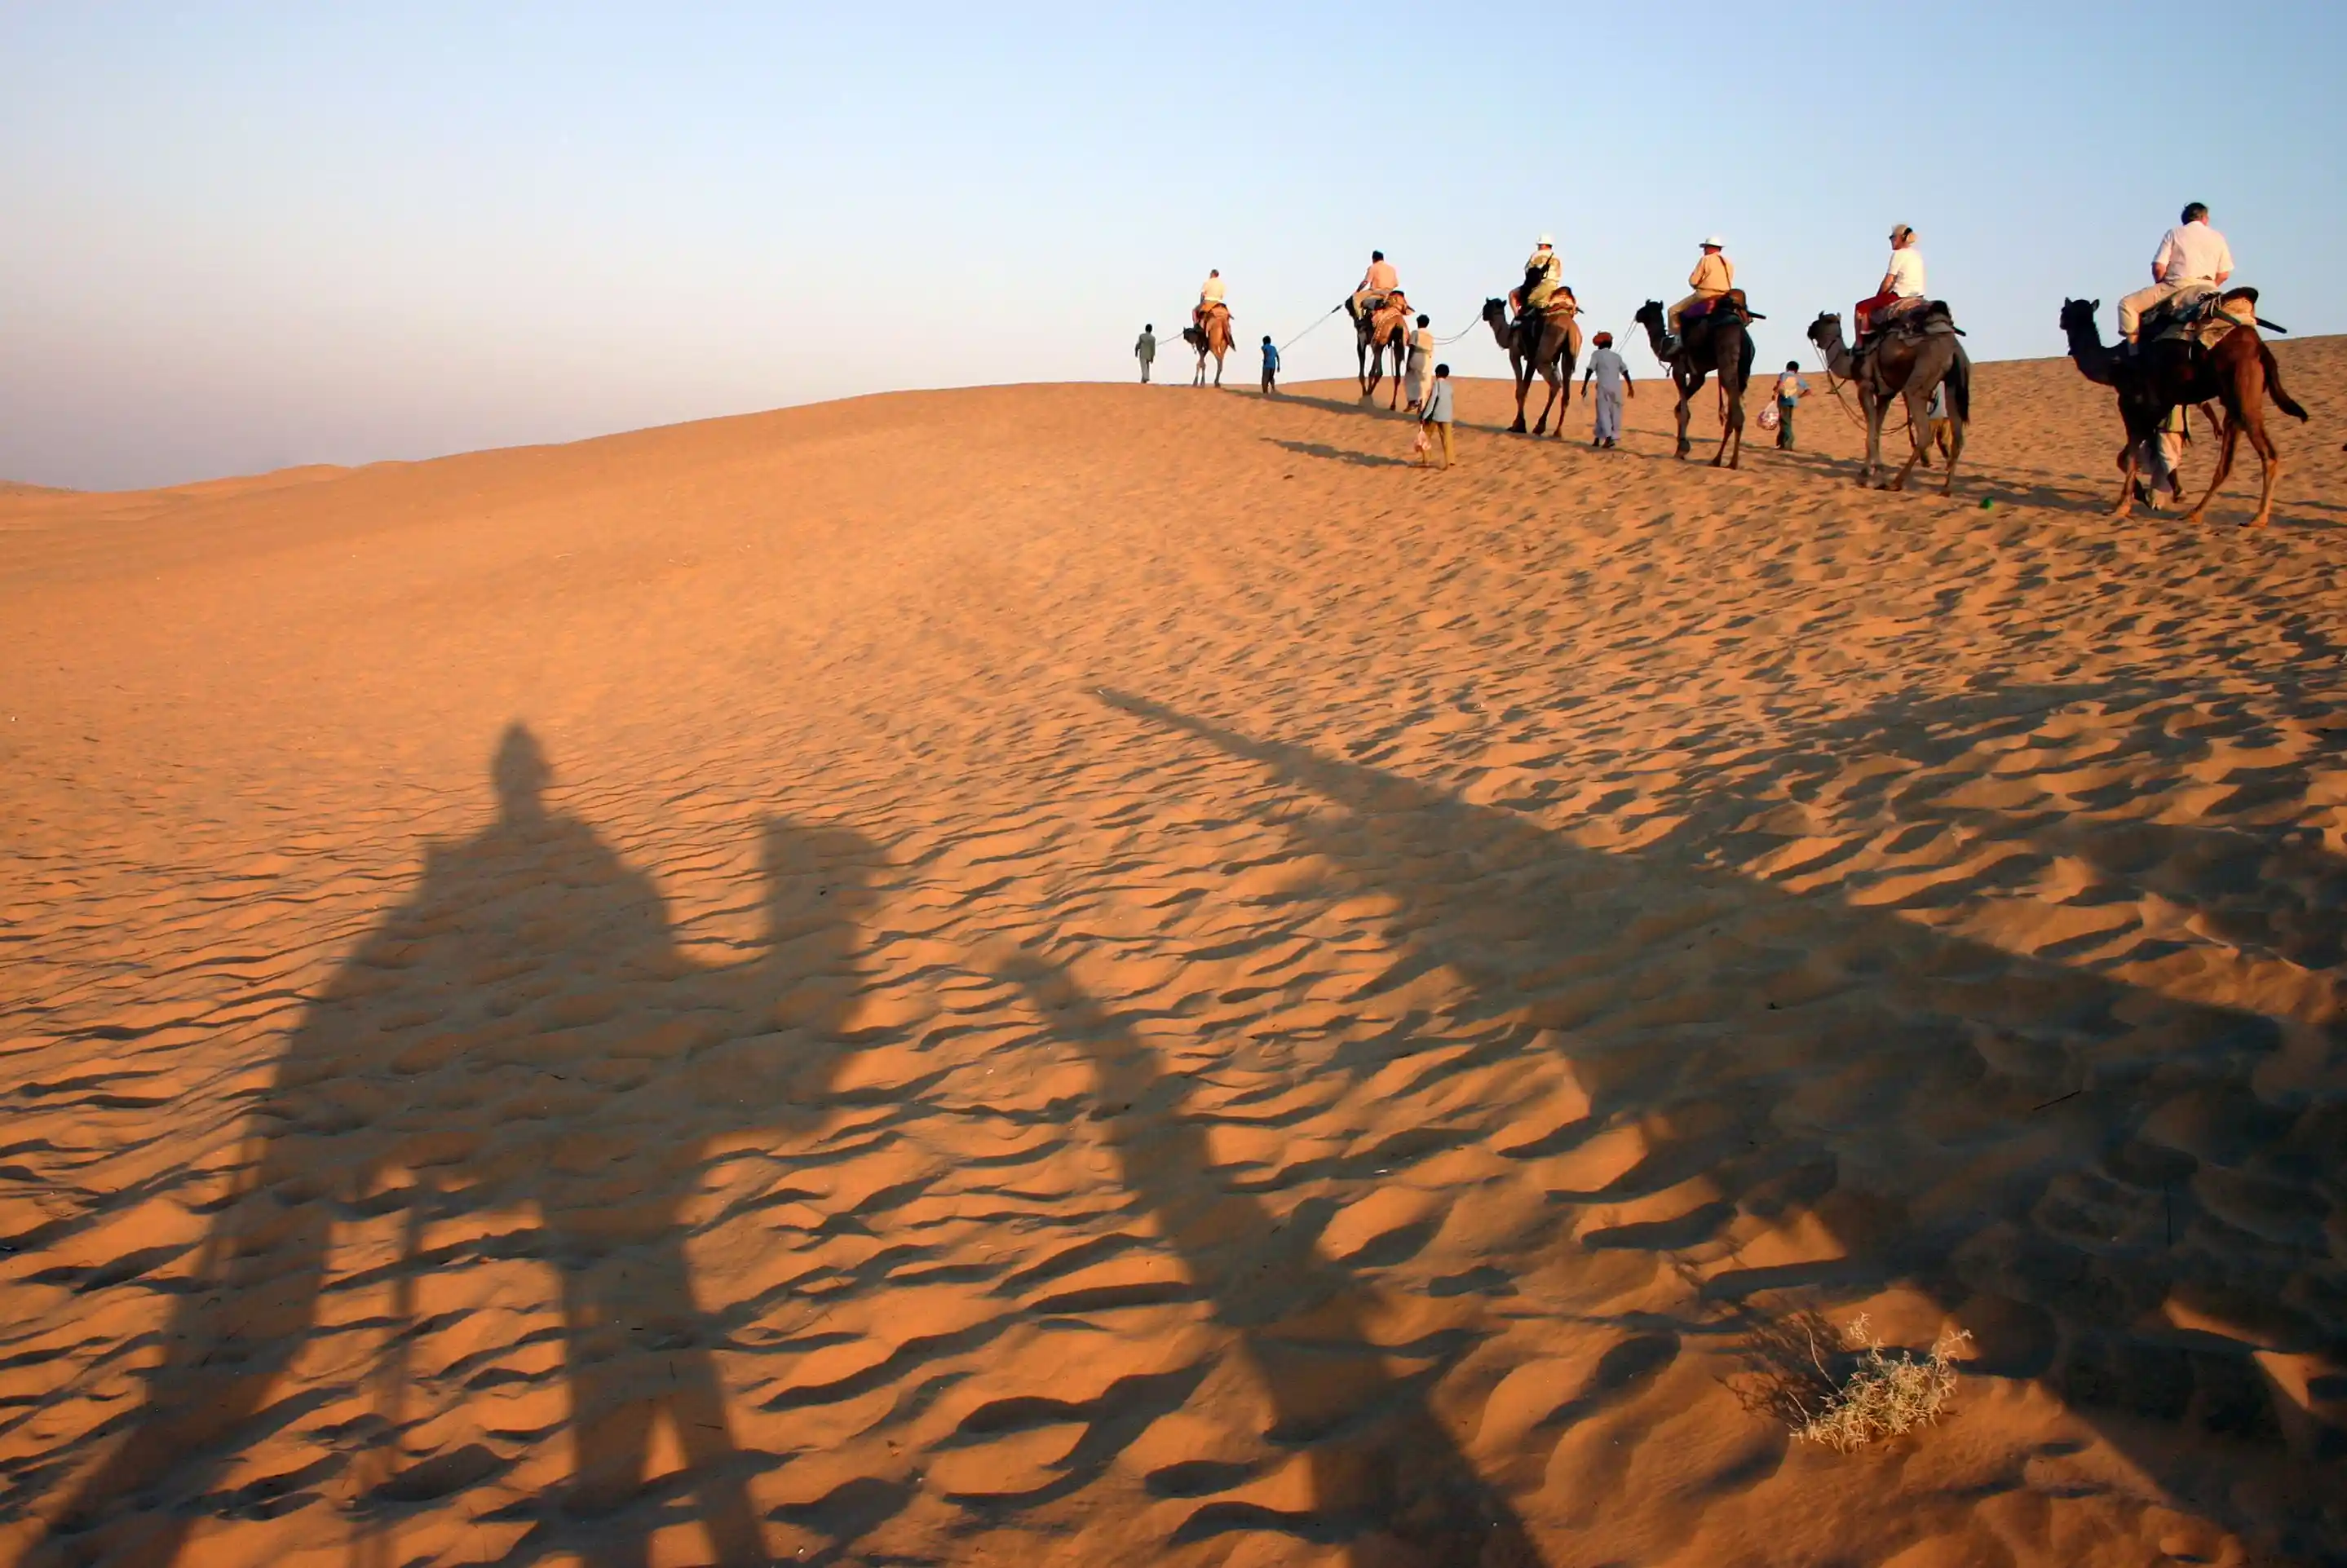 Thar desert of Rajasthan; Source: Wikipedia